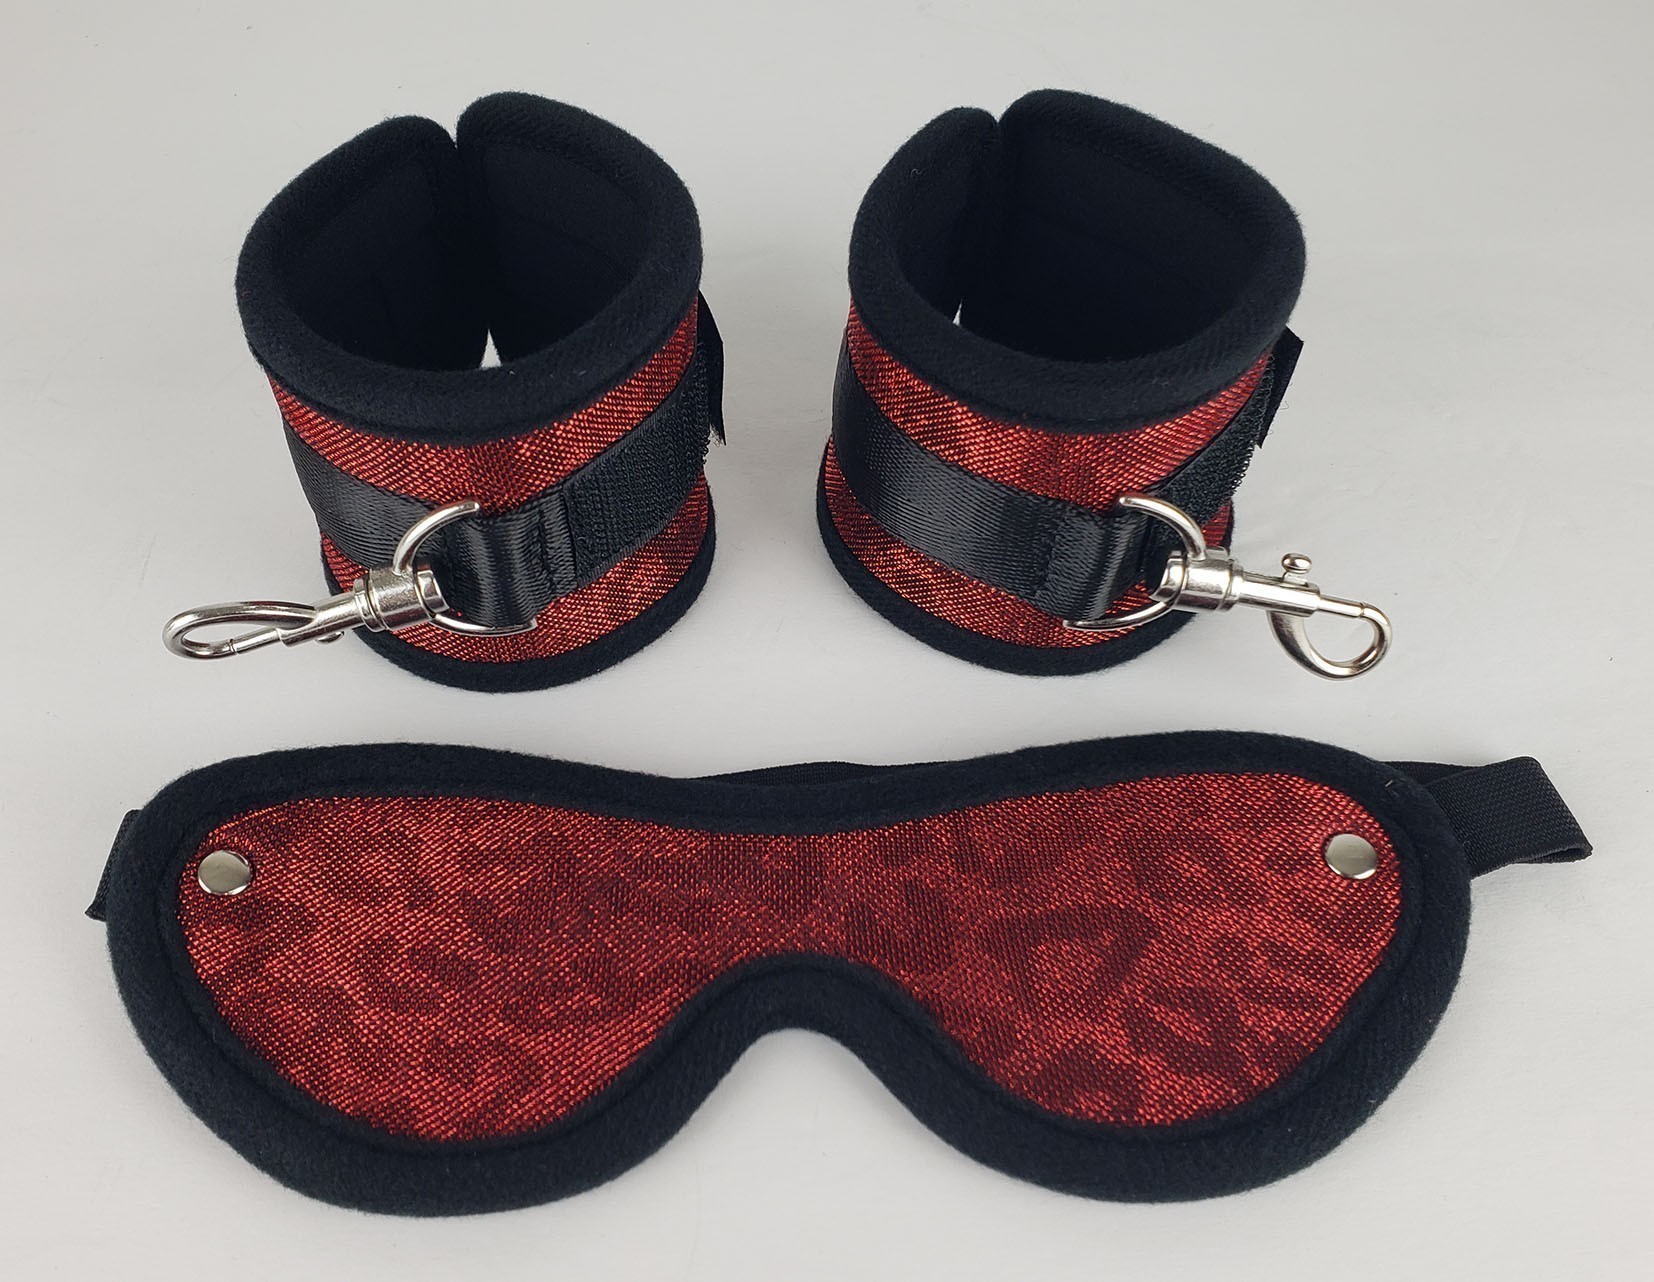 Blindfold-Wrist Cuffs Kit-Neoprene Red